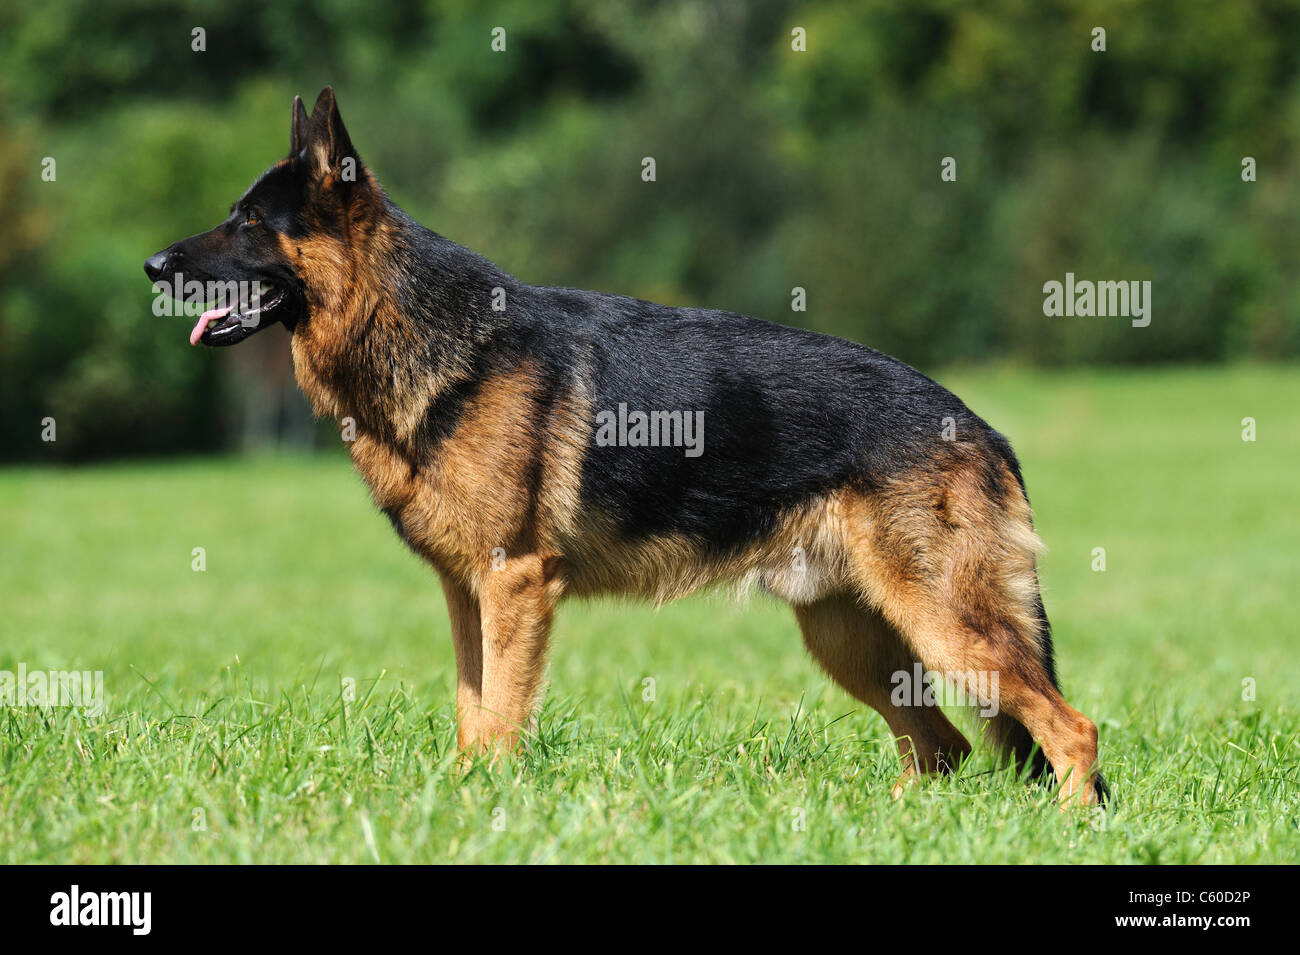 German Shepherd Dog Alsatian Canis Lupus Familiaris Black And